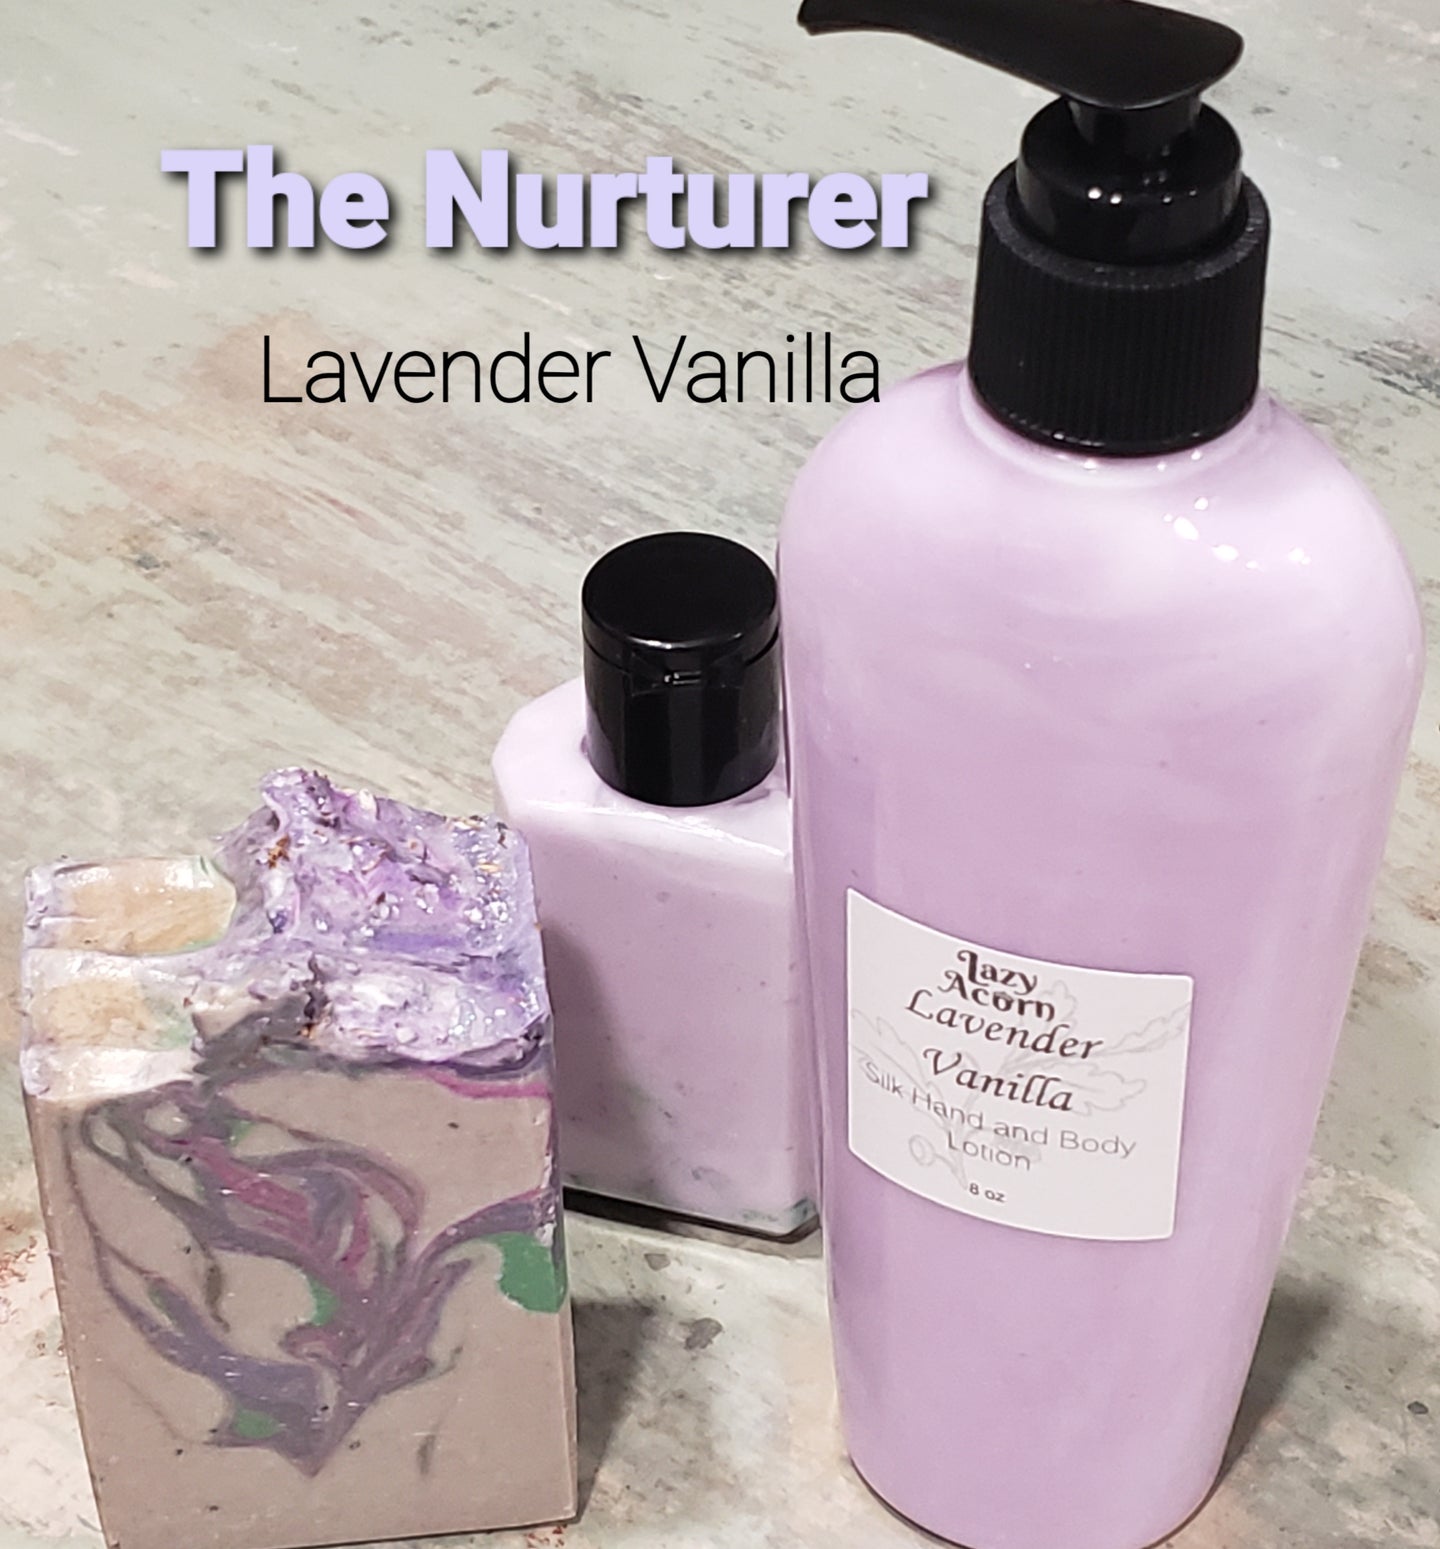 Vanilla Lavender